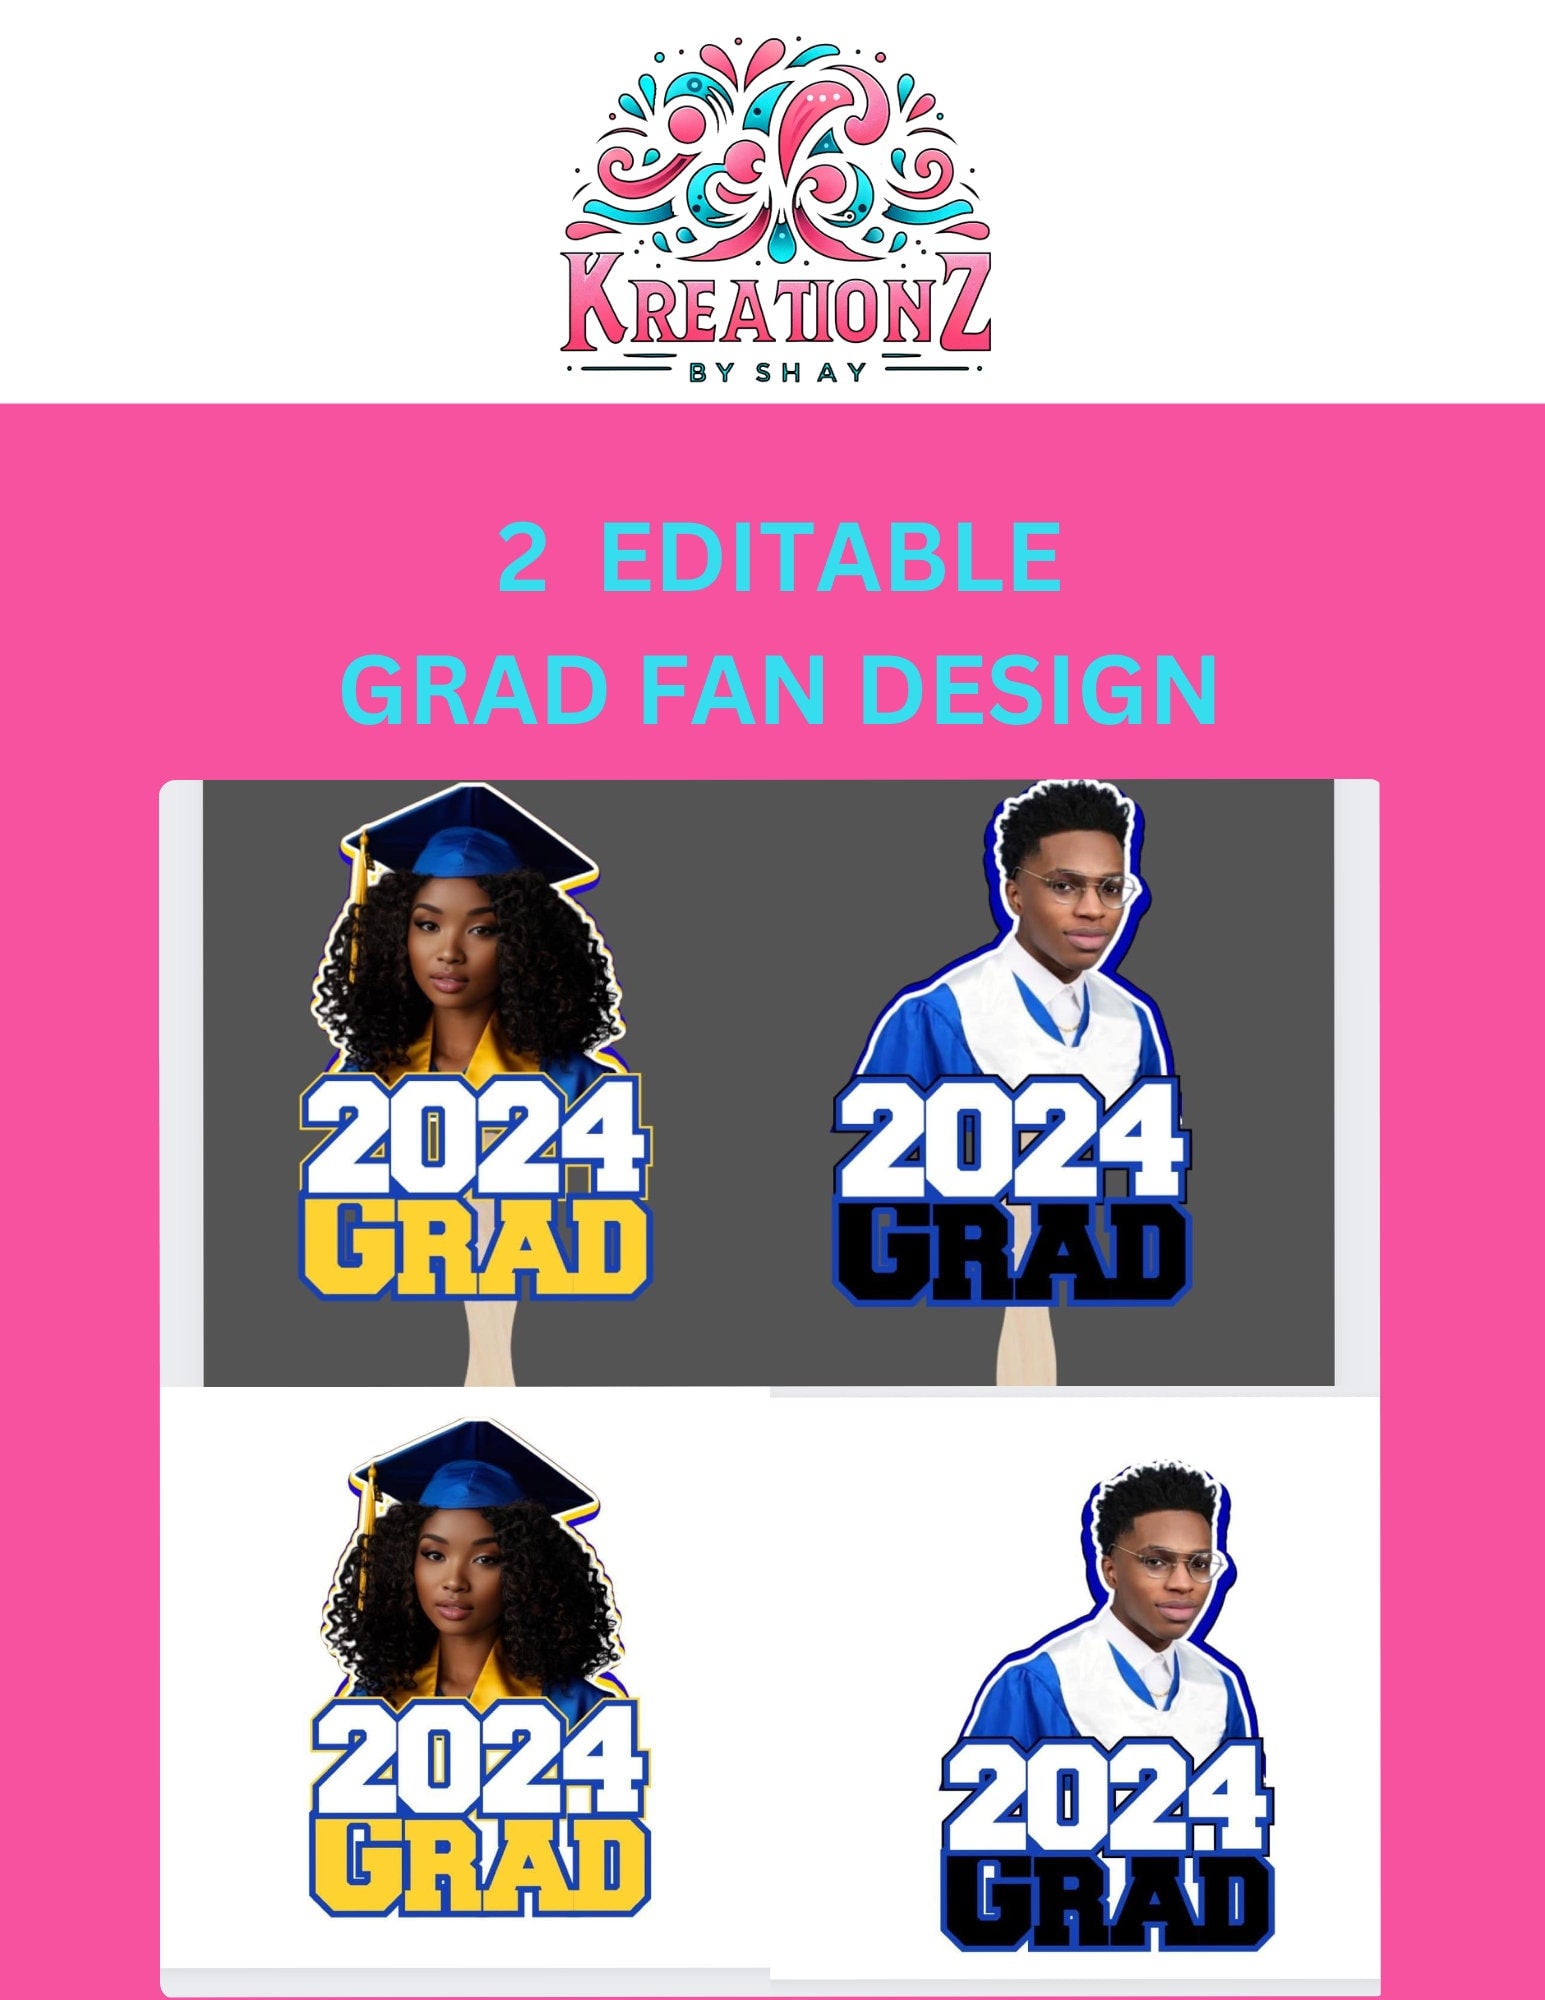 Editable Fan Templates, Grad Templates  Grad  Template  Canva   Graduation designs  Digital files • class of 2024